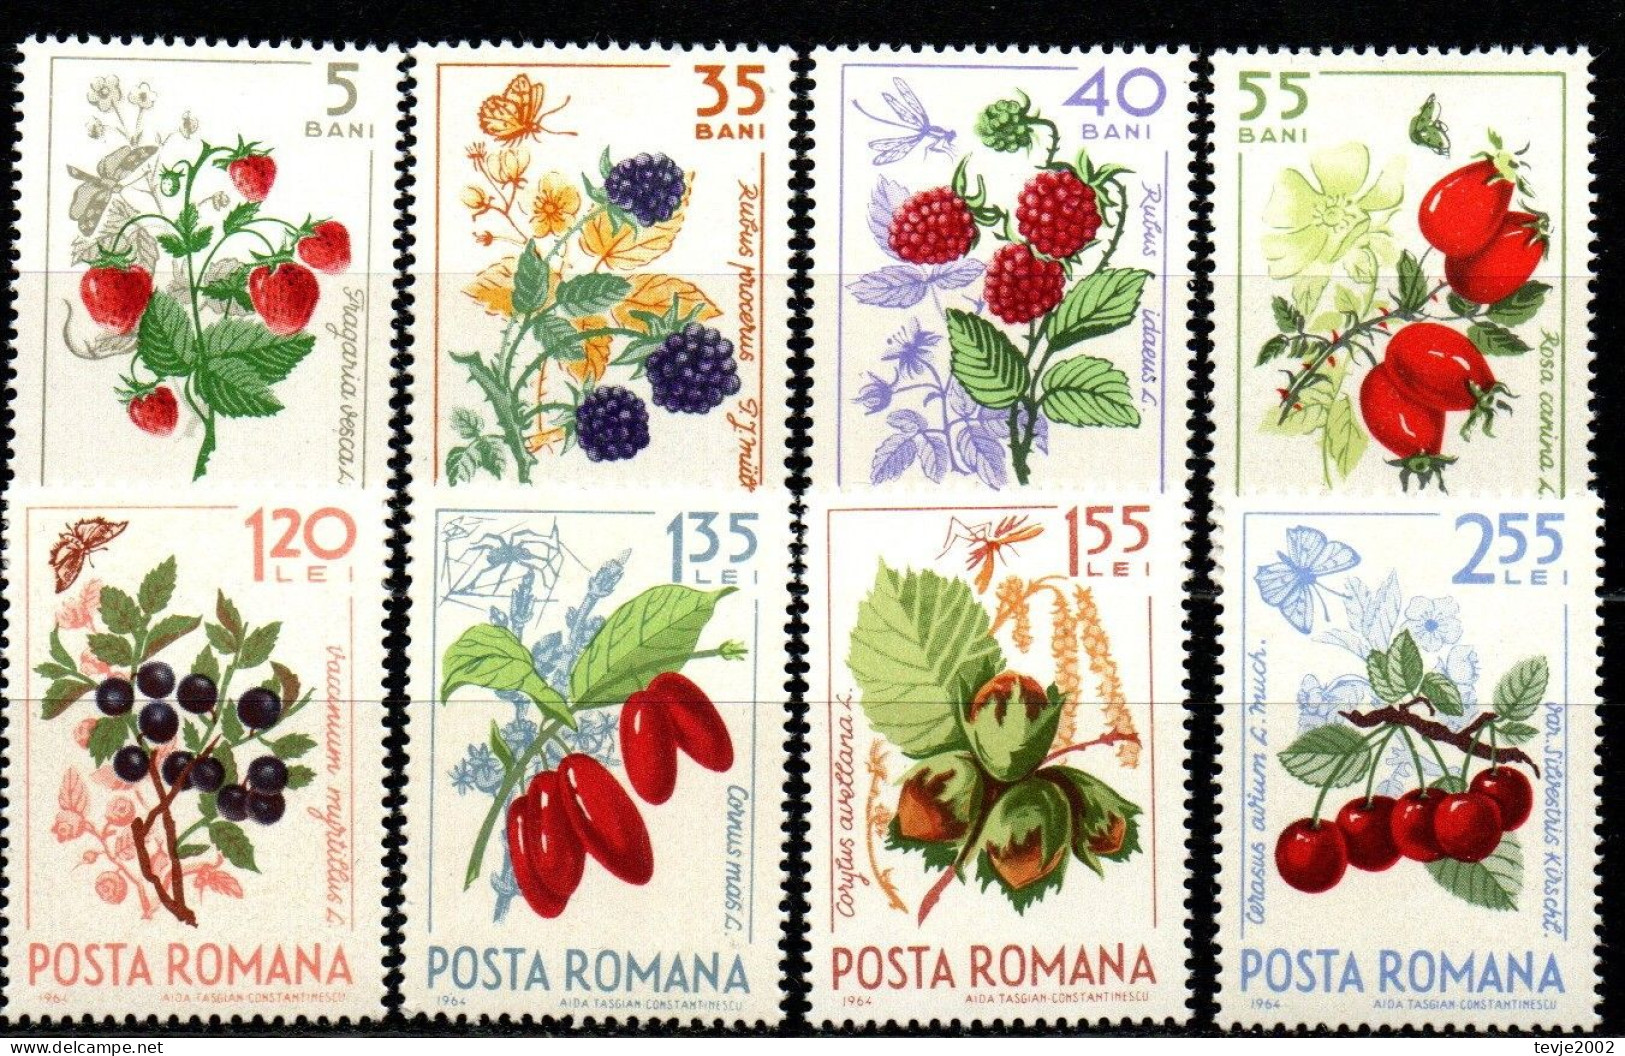 Rumänien 1964 - Mi.Nr. 2361 - 2368 - Postfrisch MNH - Früchte Fruits Beeren Berries - Fruits